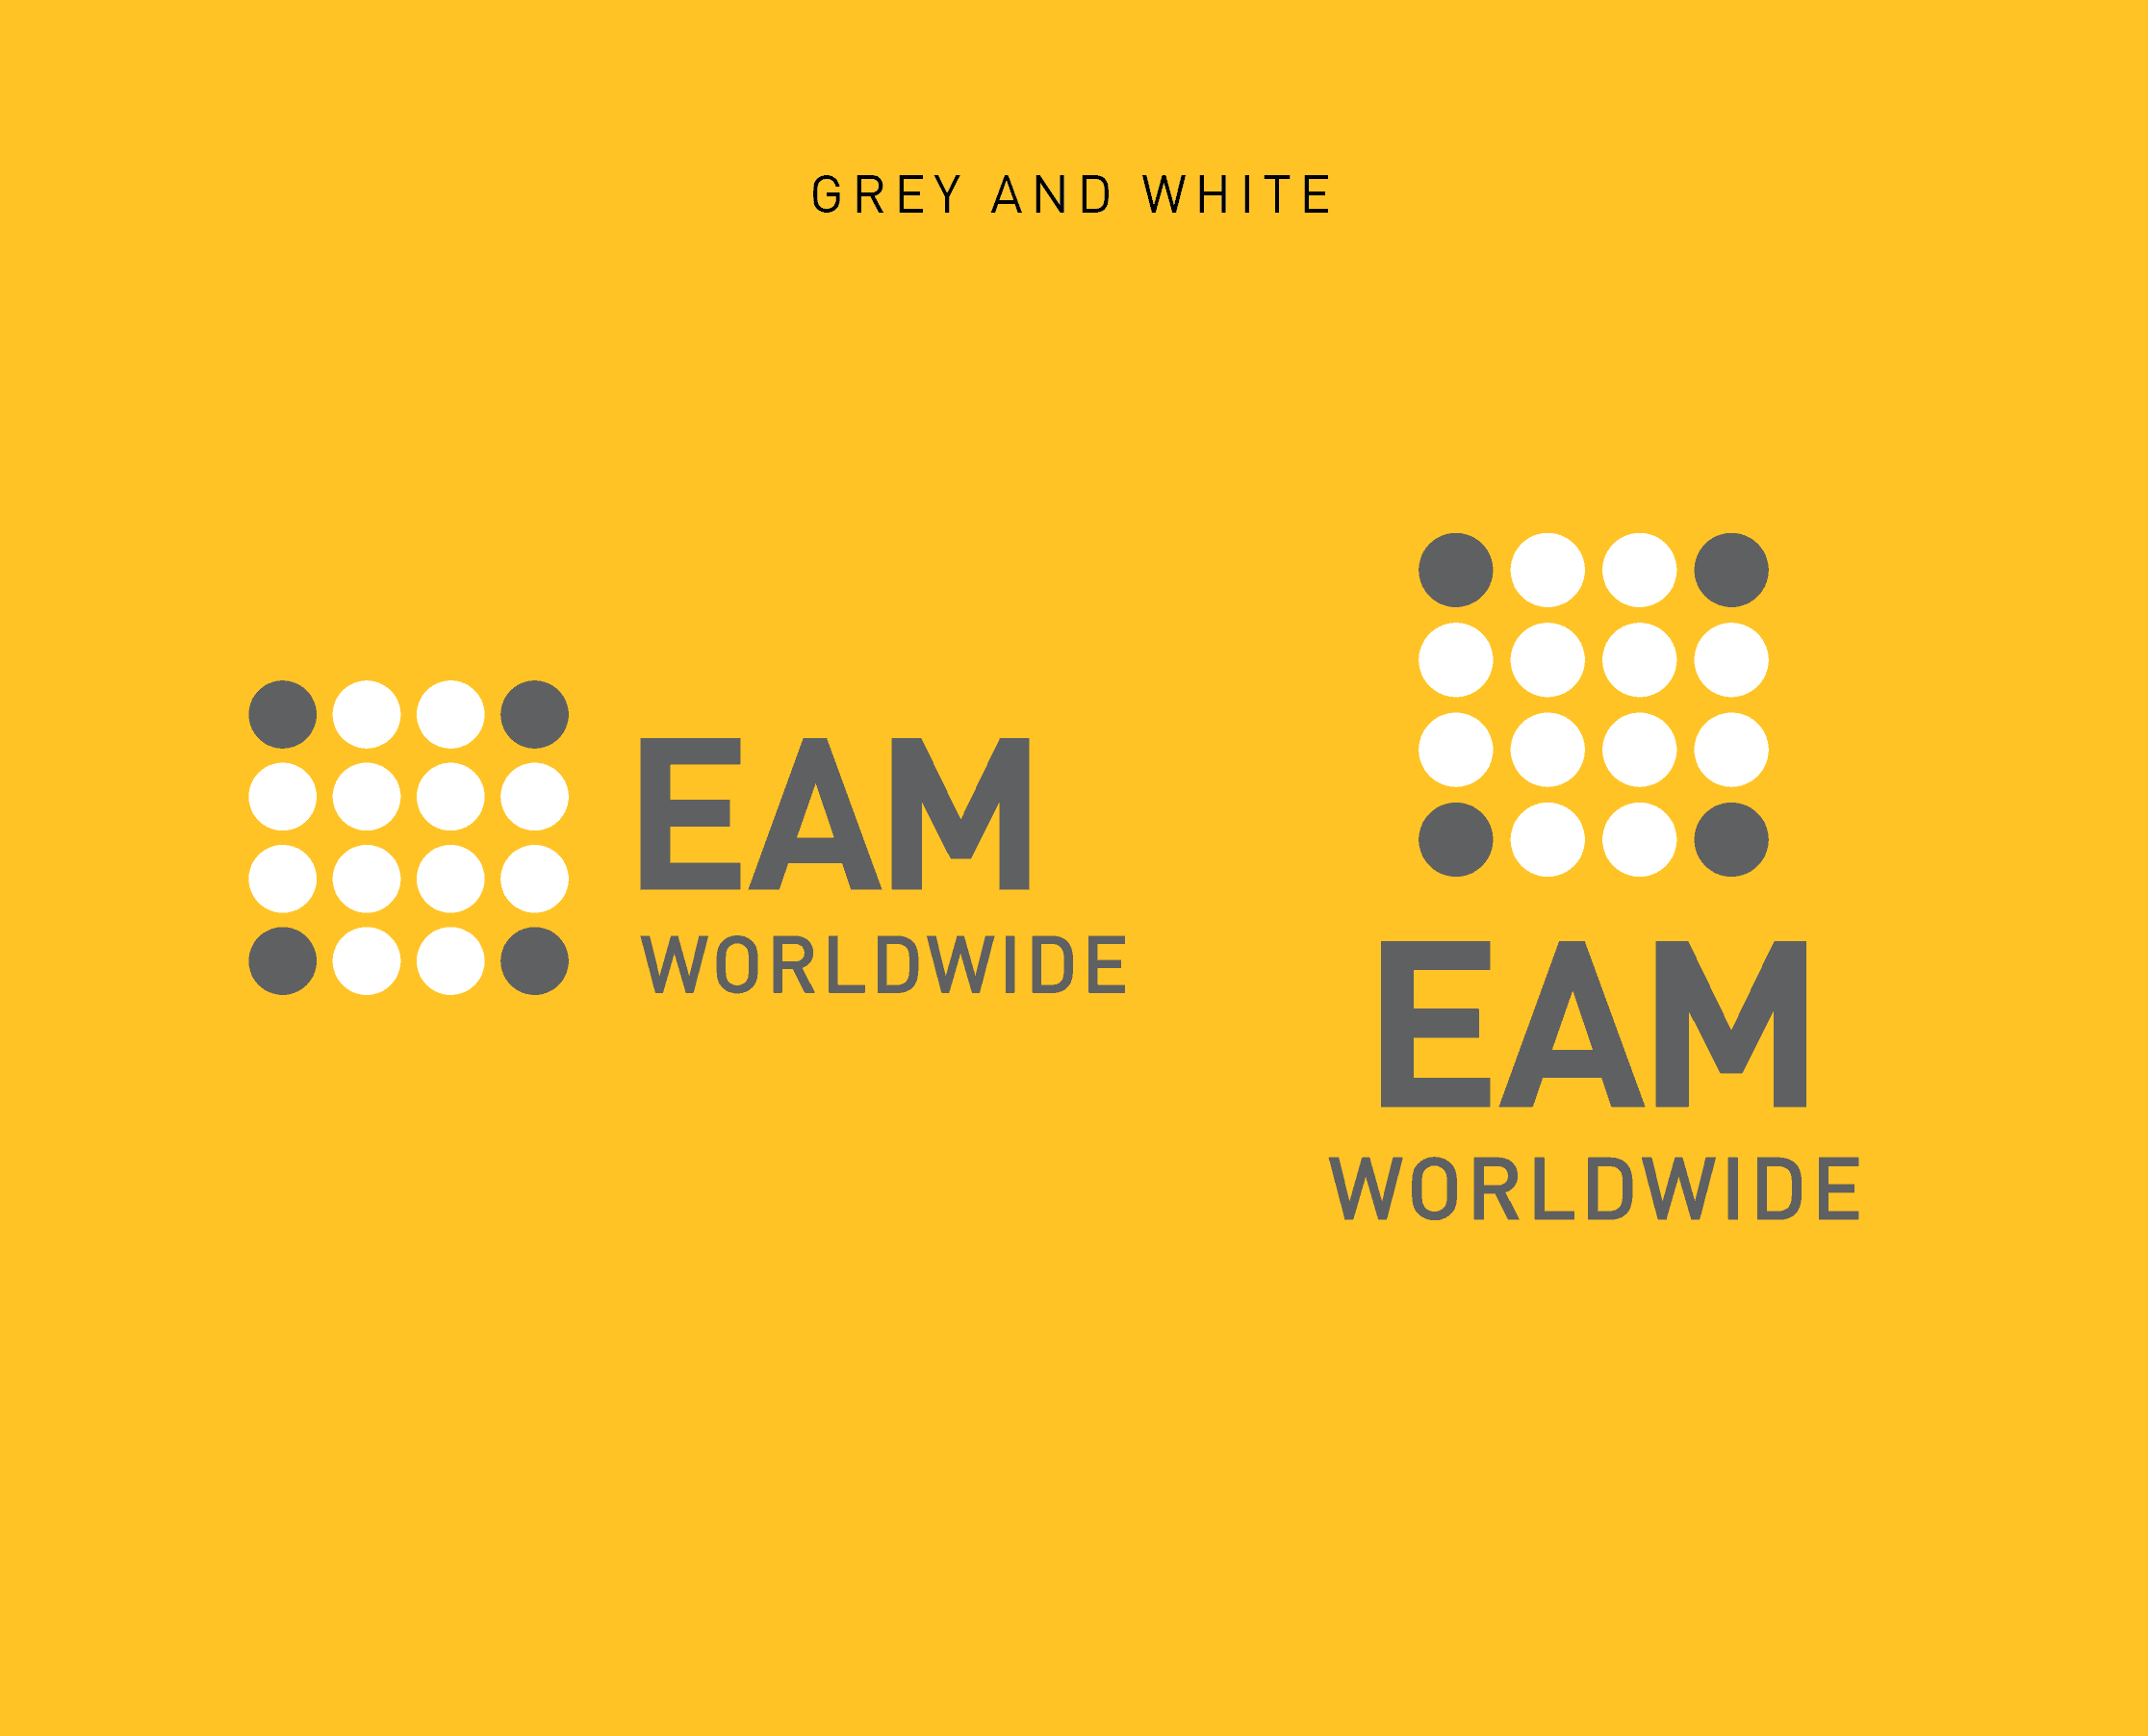 EAM Worldwide logo usage on yellow background